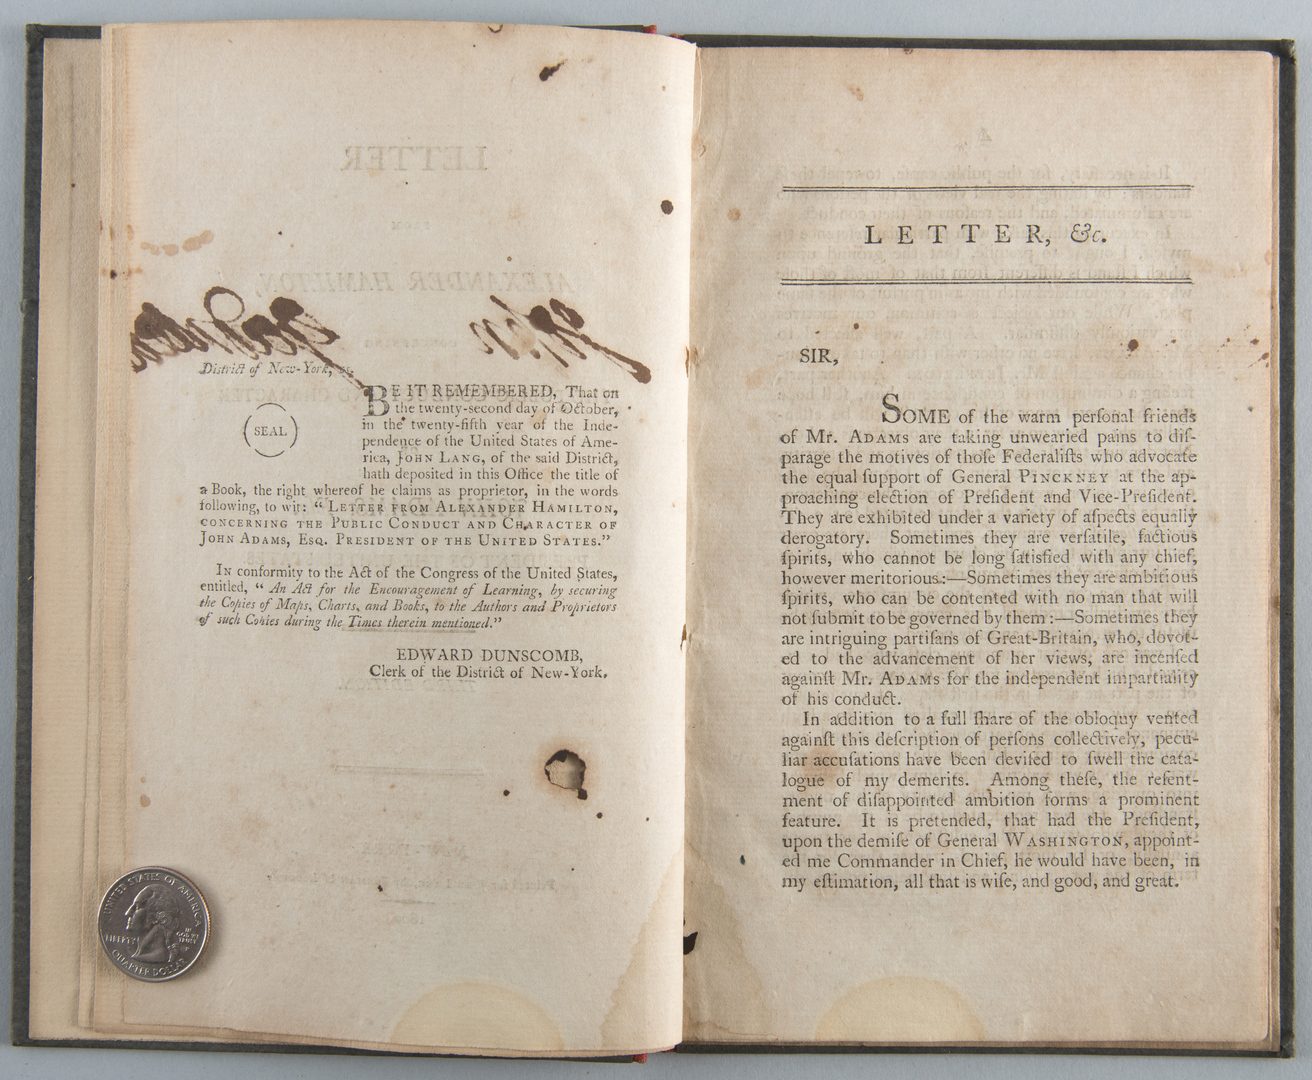 Lot 561: 2 Pamphlets: Alexander Hamilton and John Adams